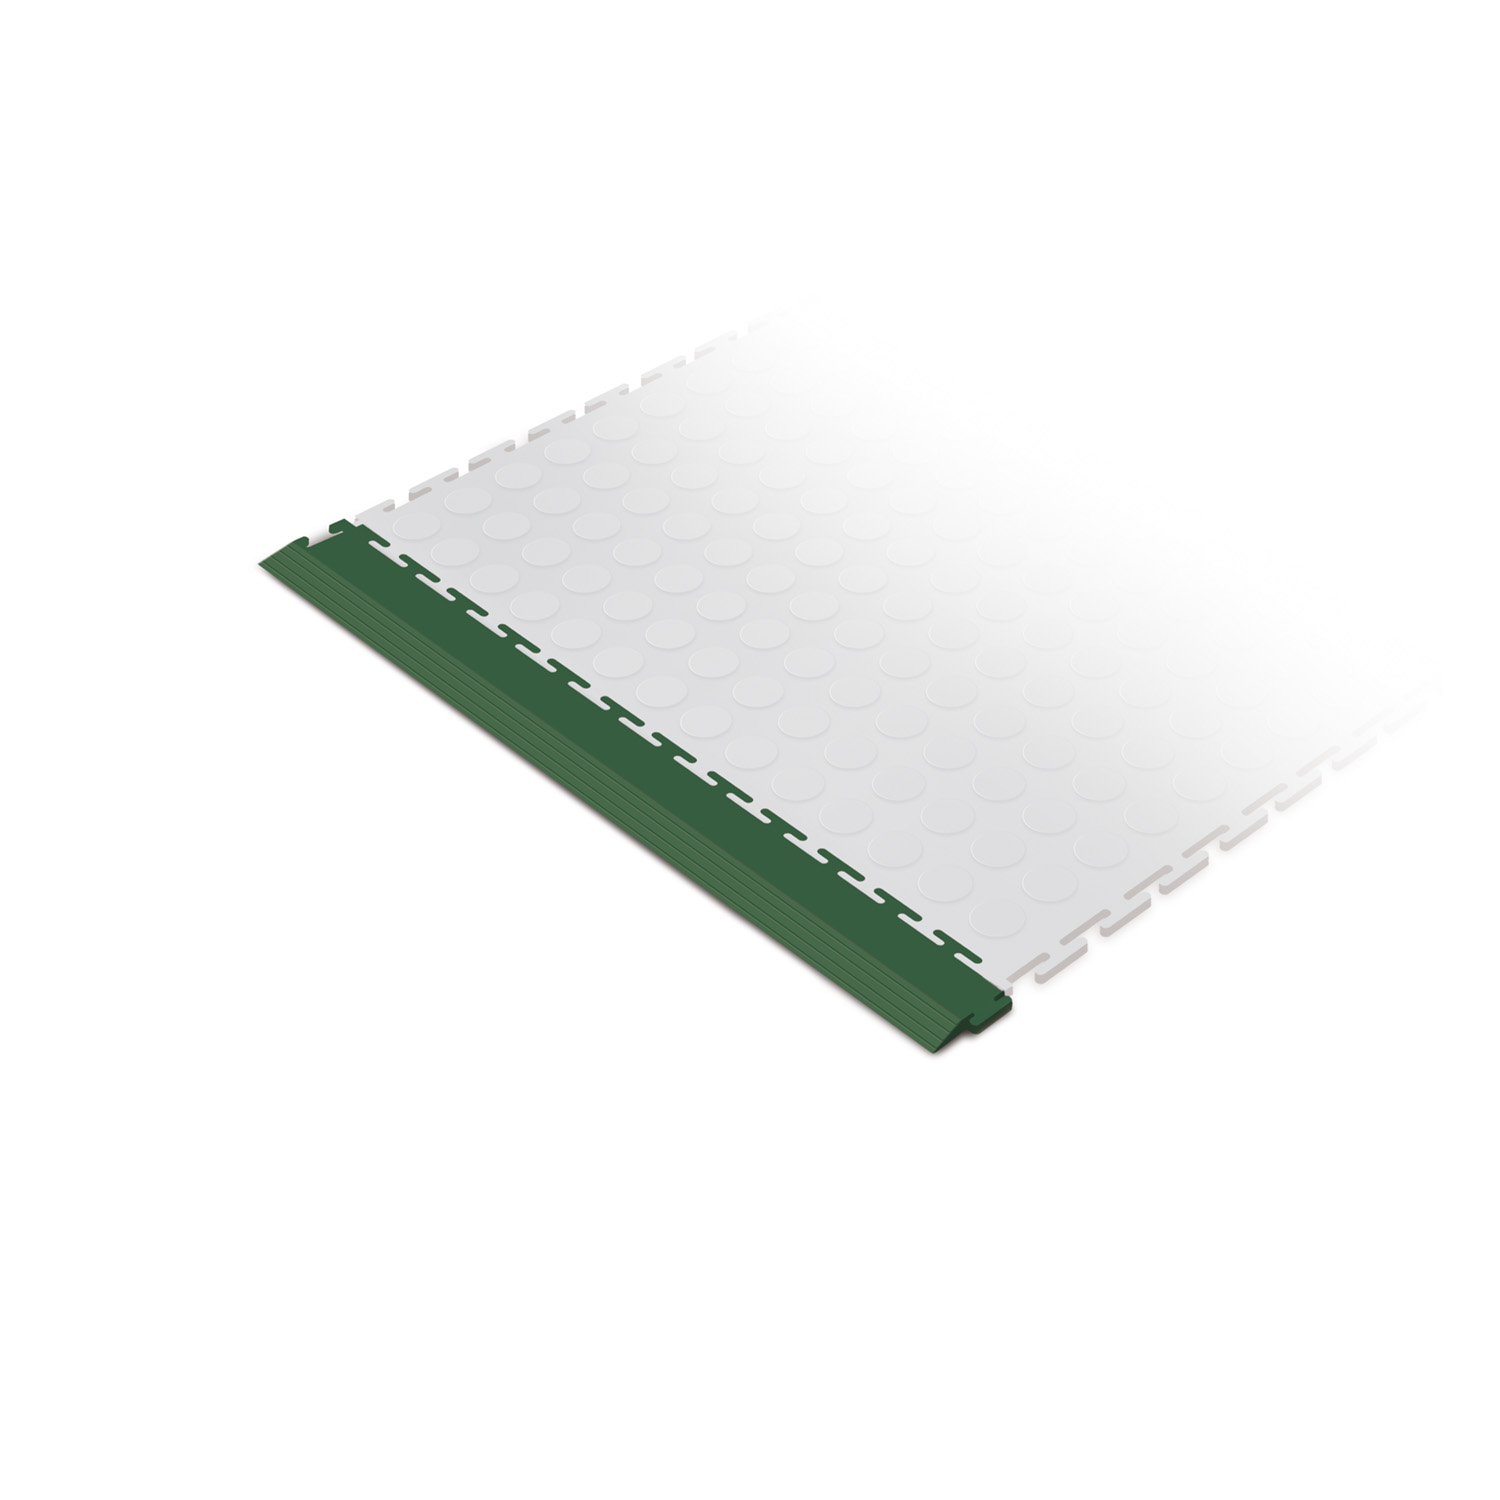 Standard edge ramp tile (green)